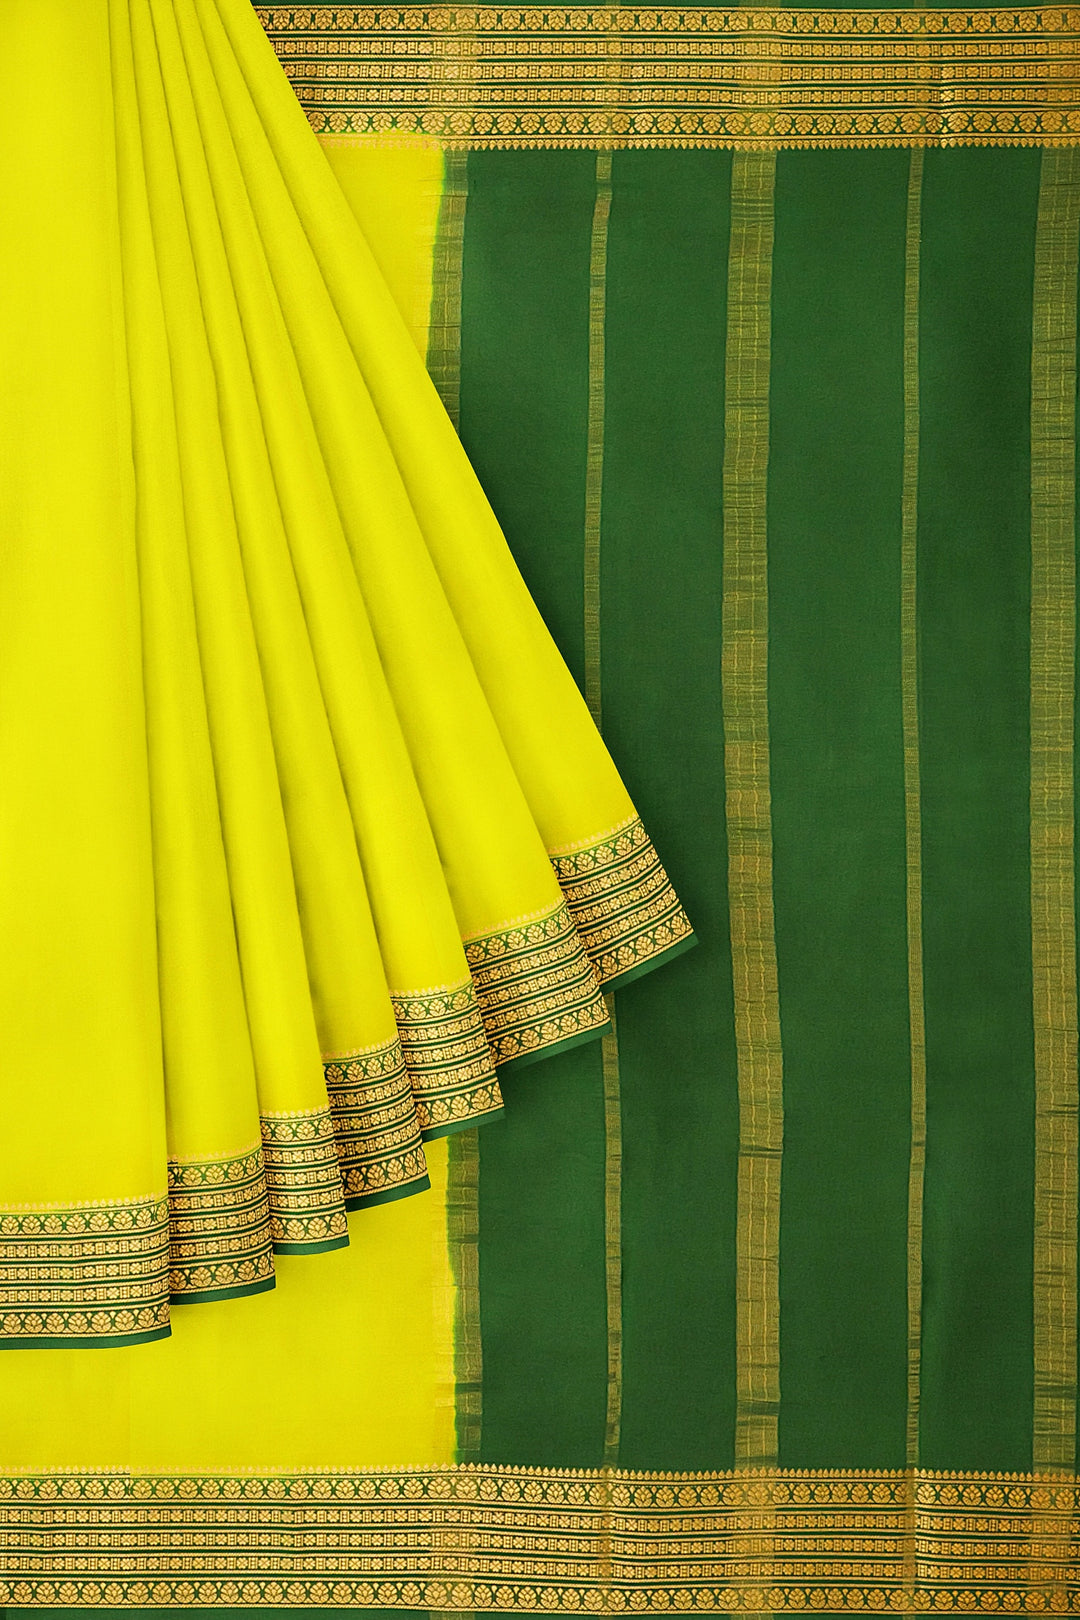 Neon Yellow Pure Mysore Crepe Silk Saree | SILK MARK CERTIFIED